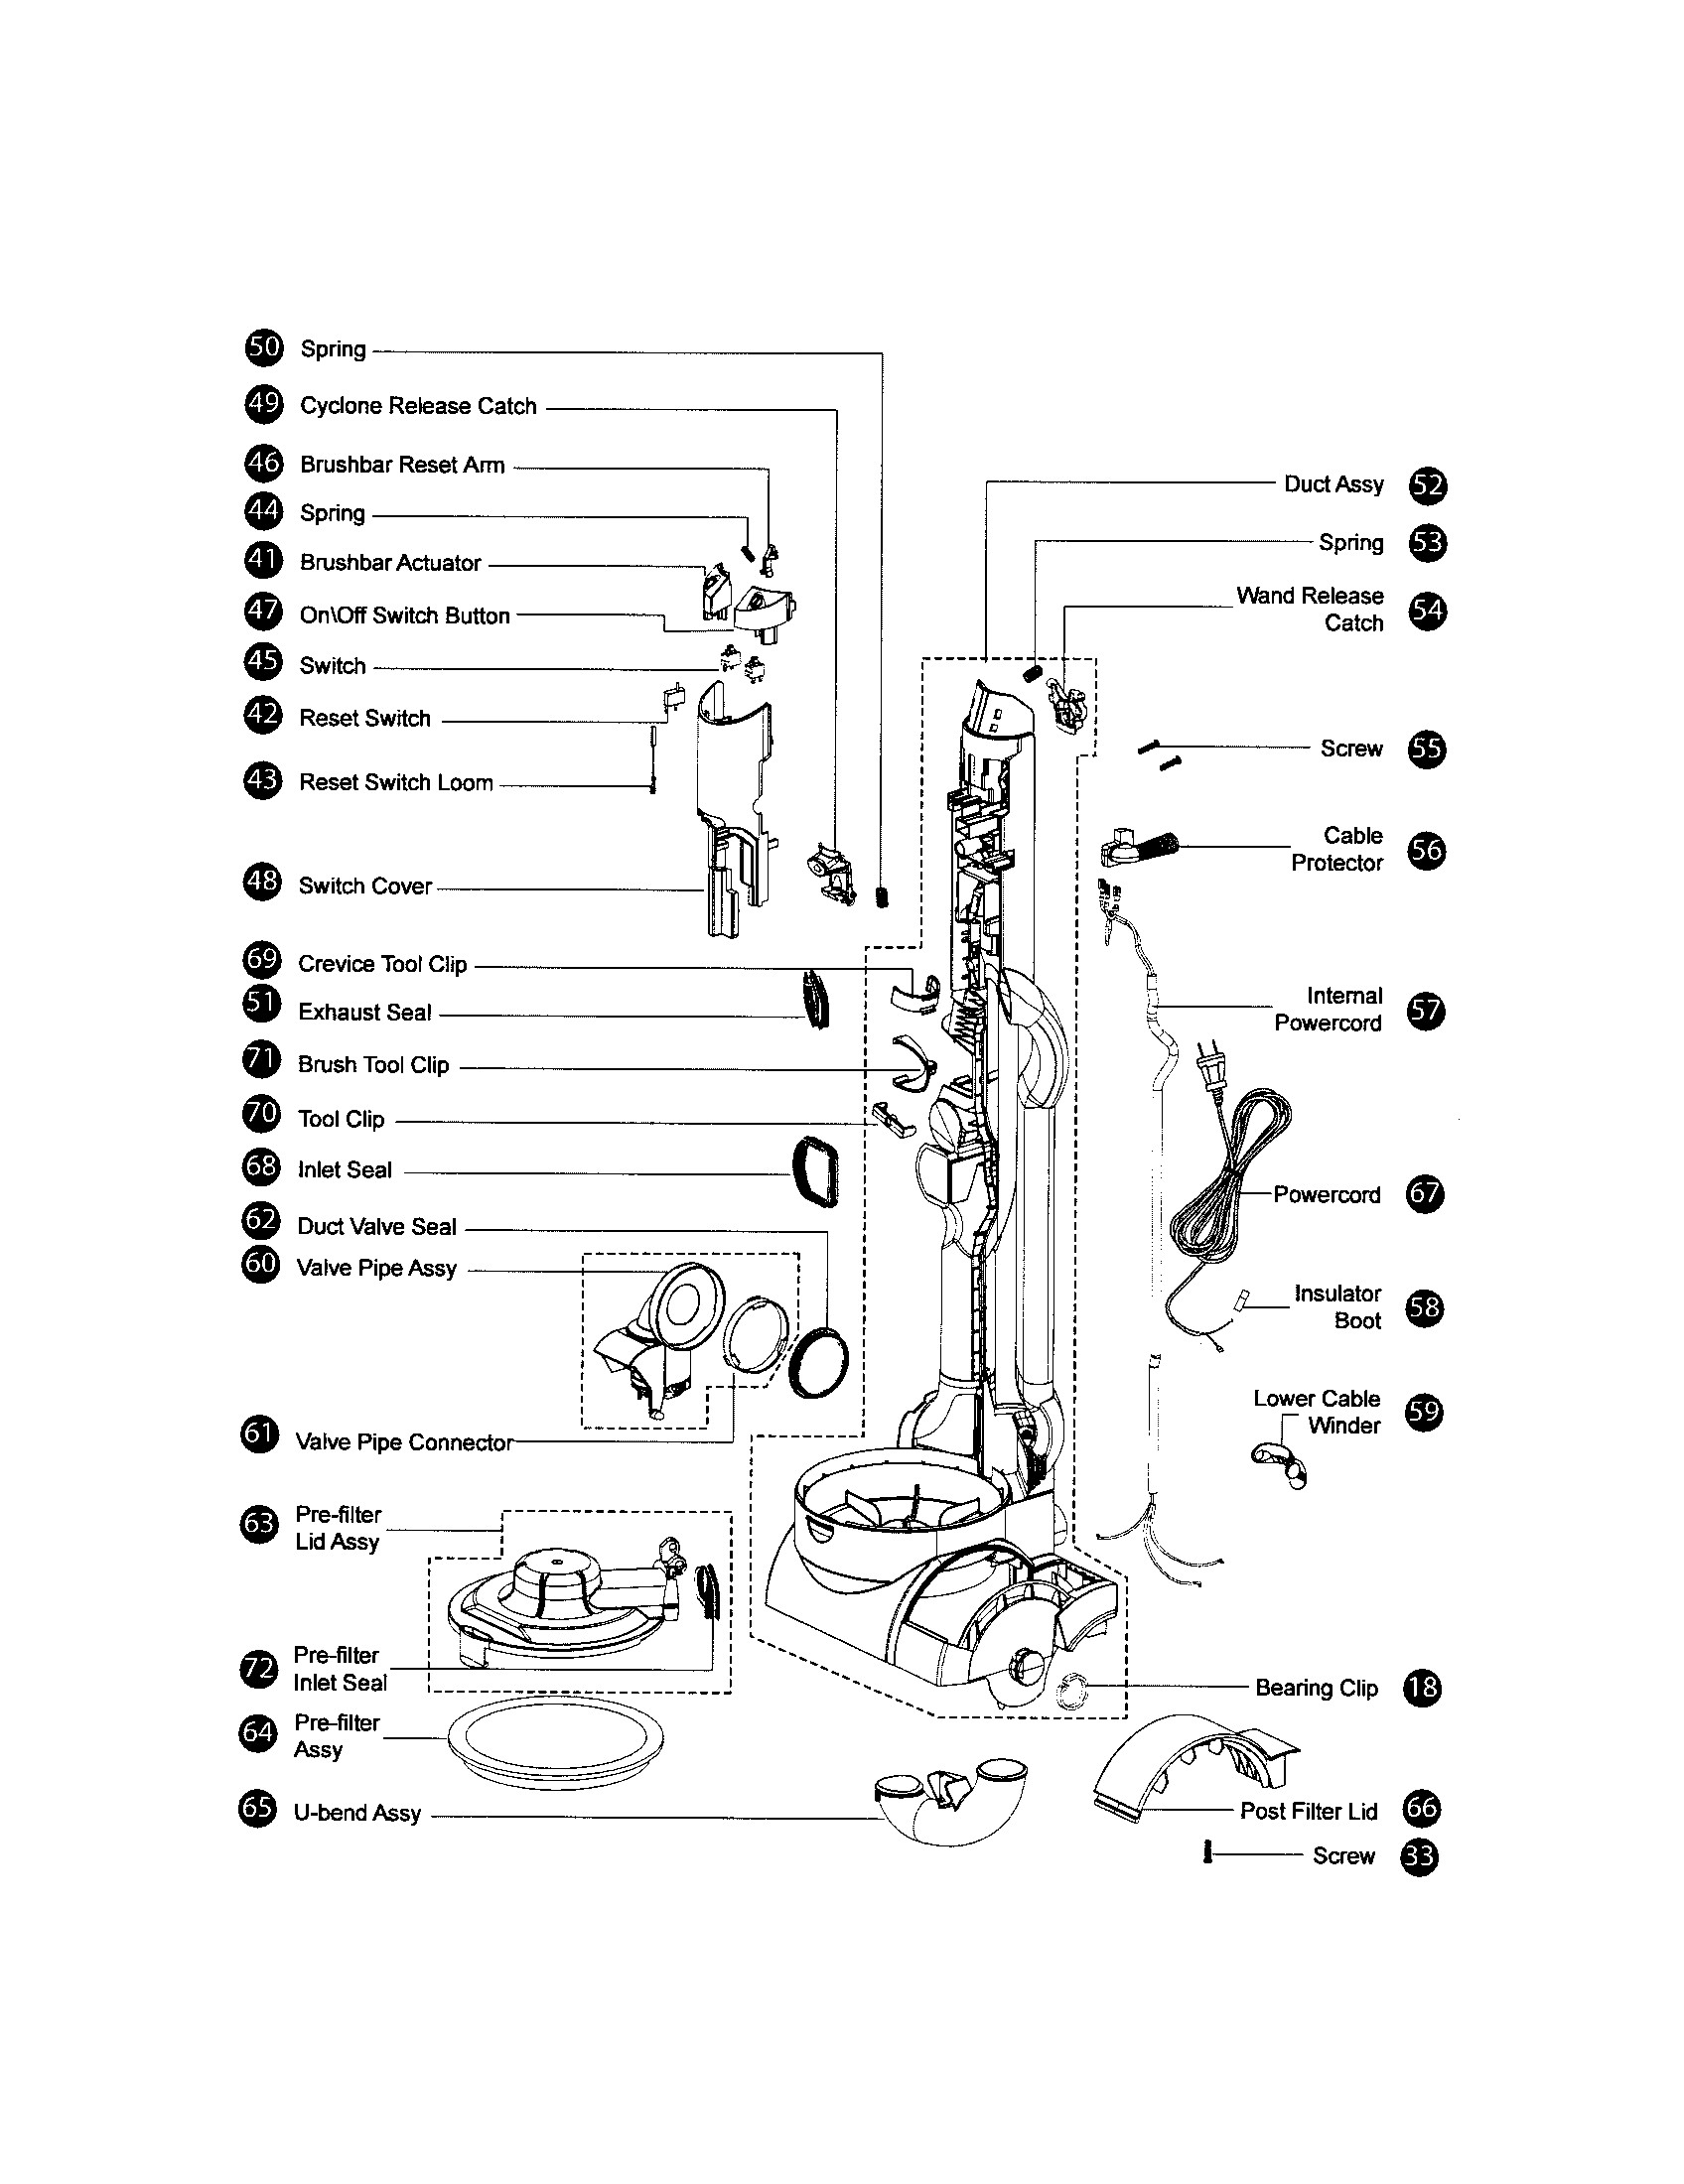 Dyson Dc25 Parts Diagram | My Wiring DIagram